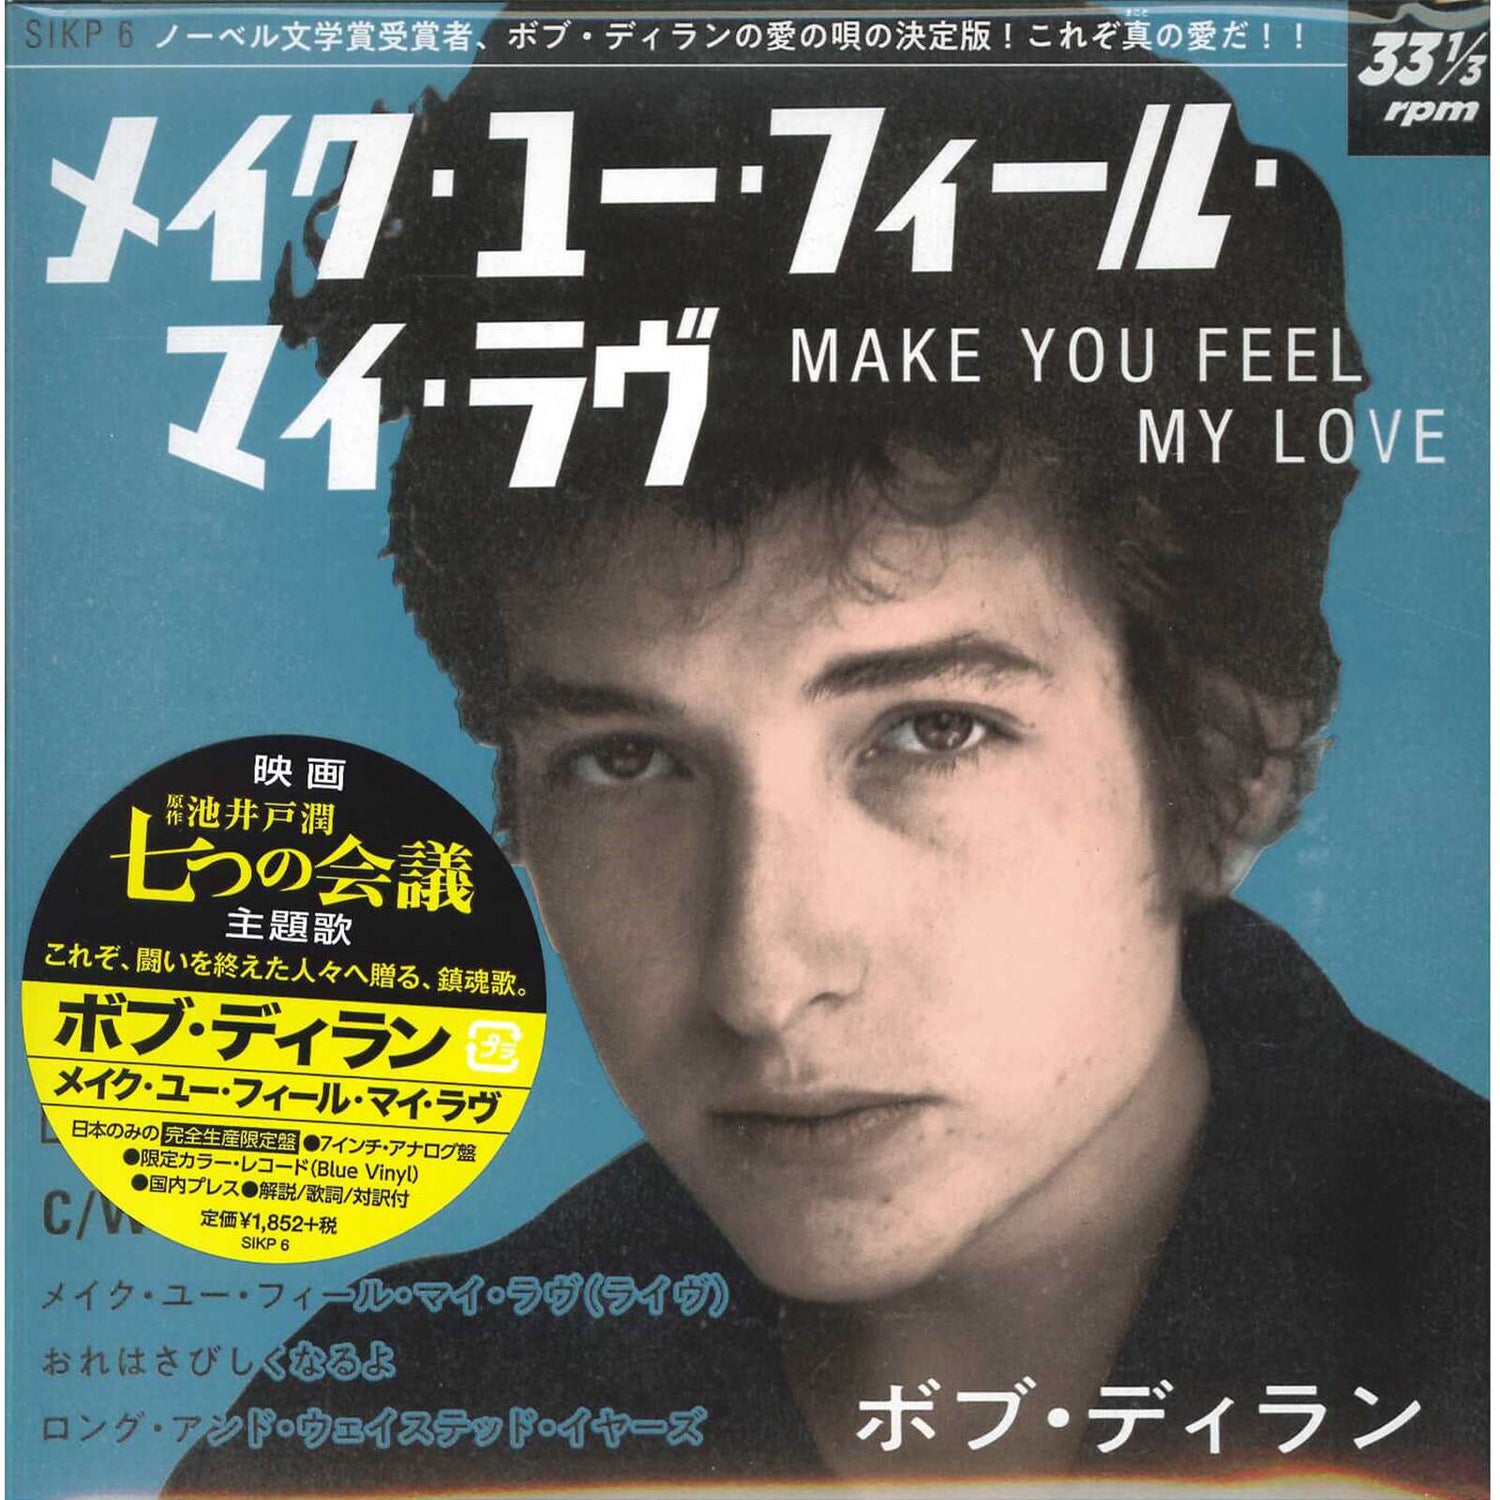 Bob Dylan - Make You Feel My Love 7" Japanese Edition